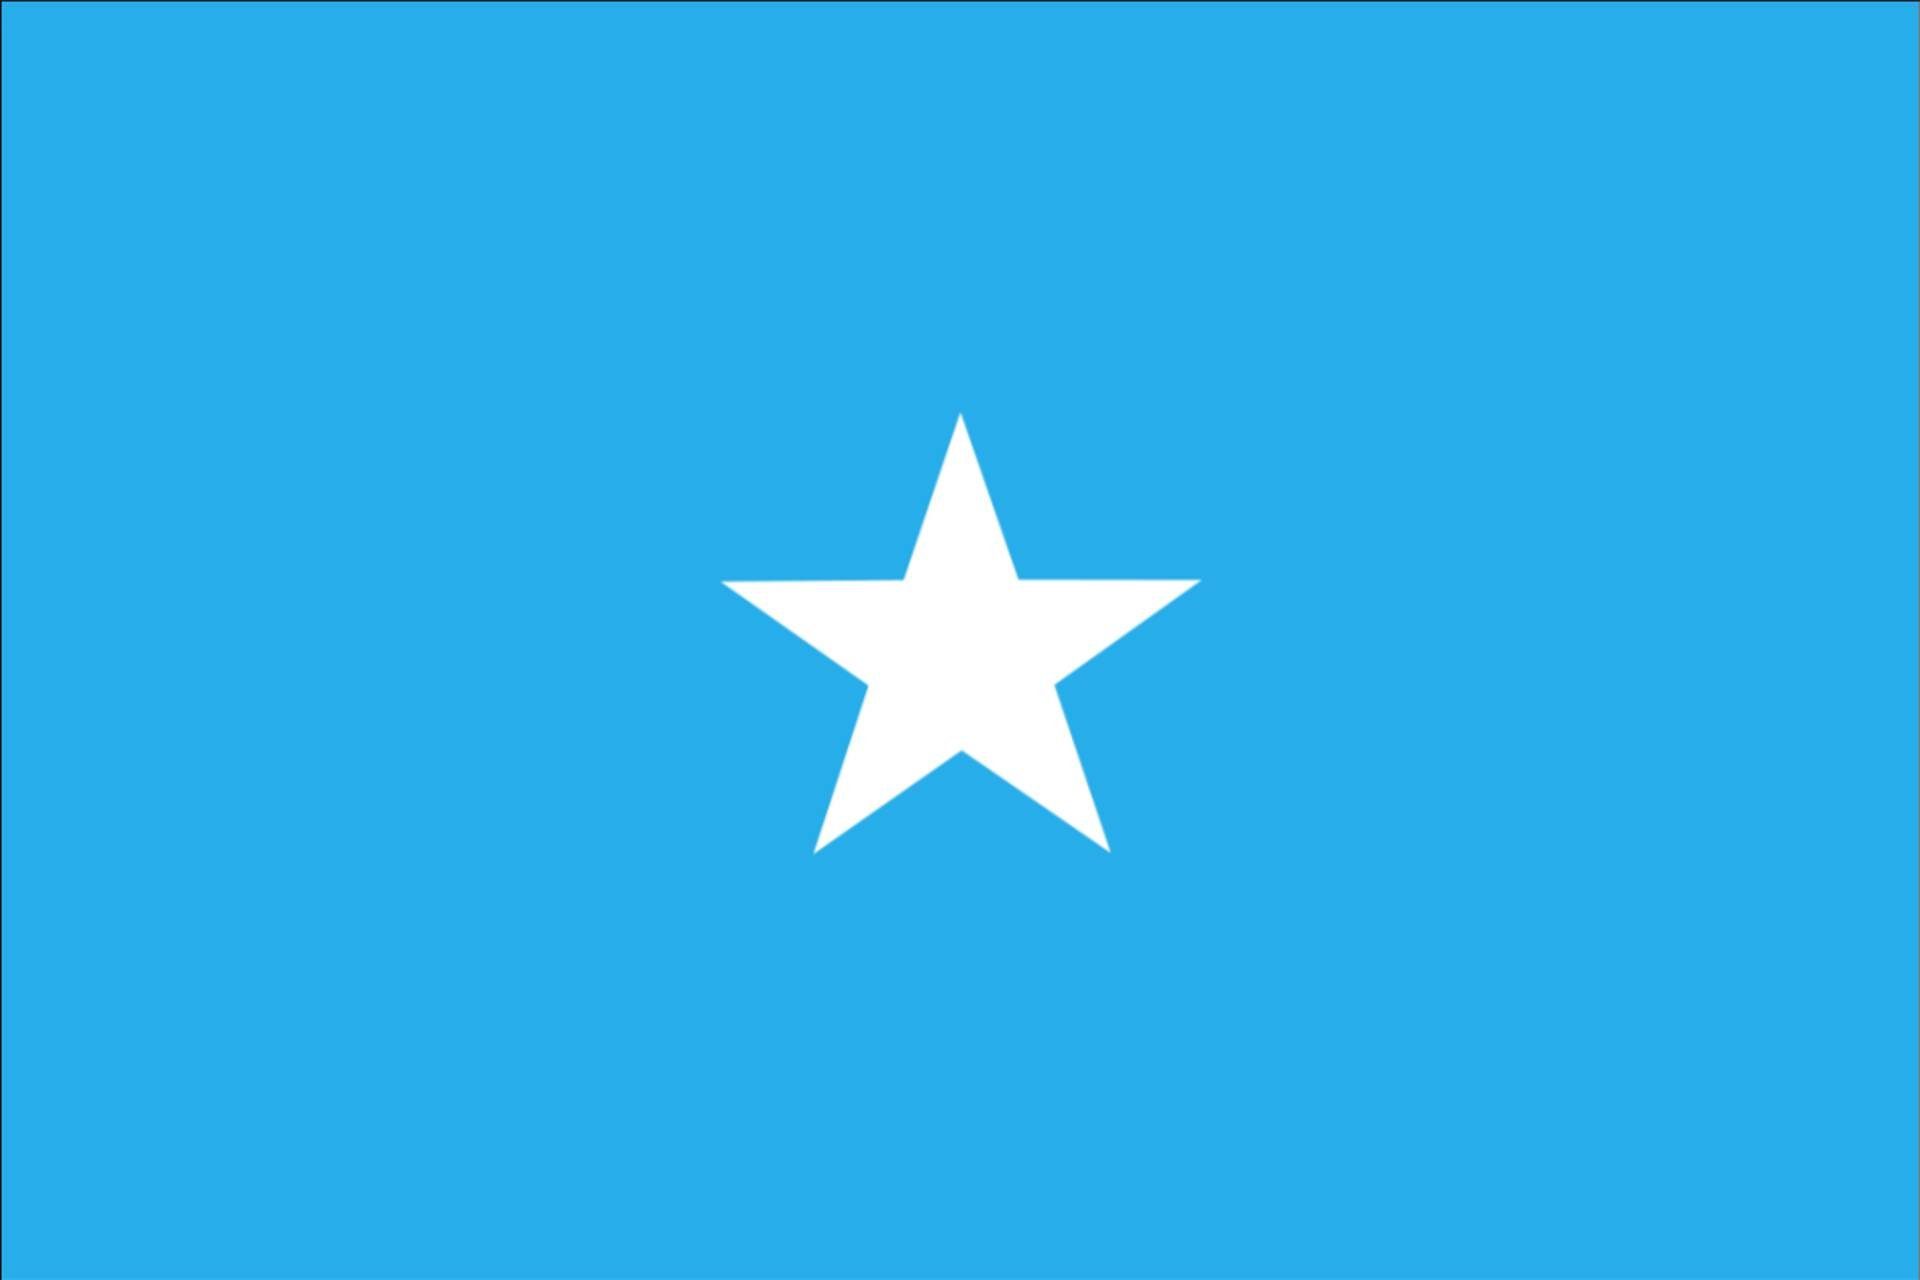 g/m² Somalia flaggenmeer 80 Flagge